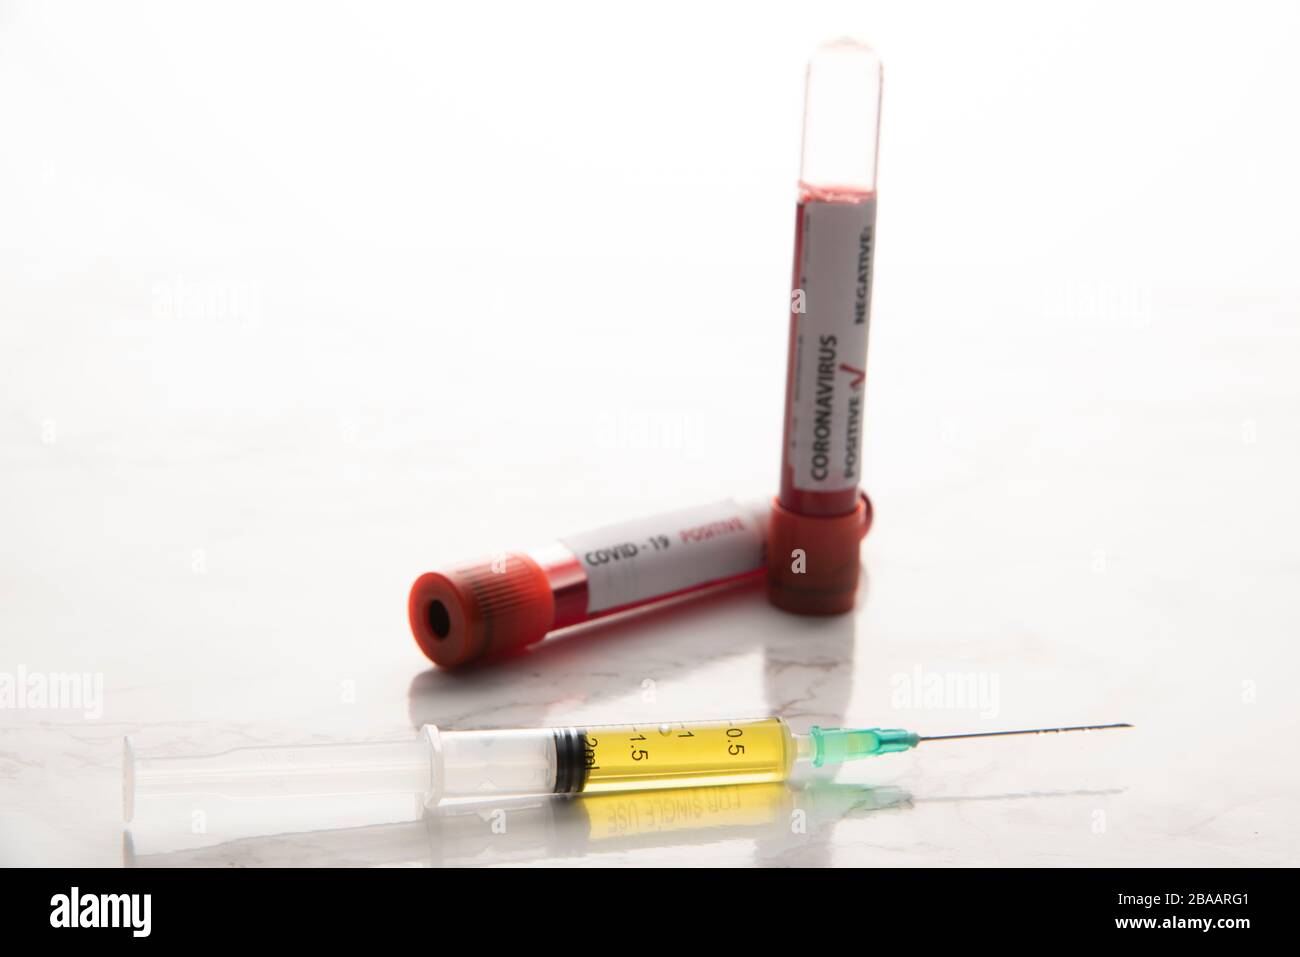 coronavirus covid-19 vaccine with blood samples Stock Photo